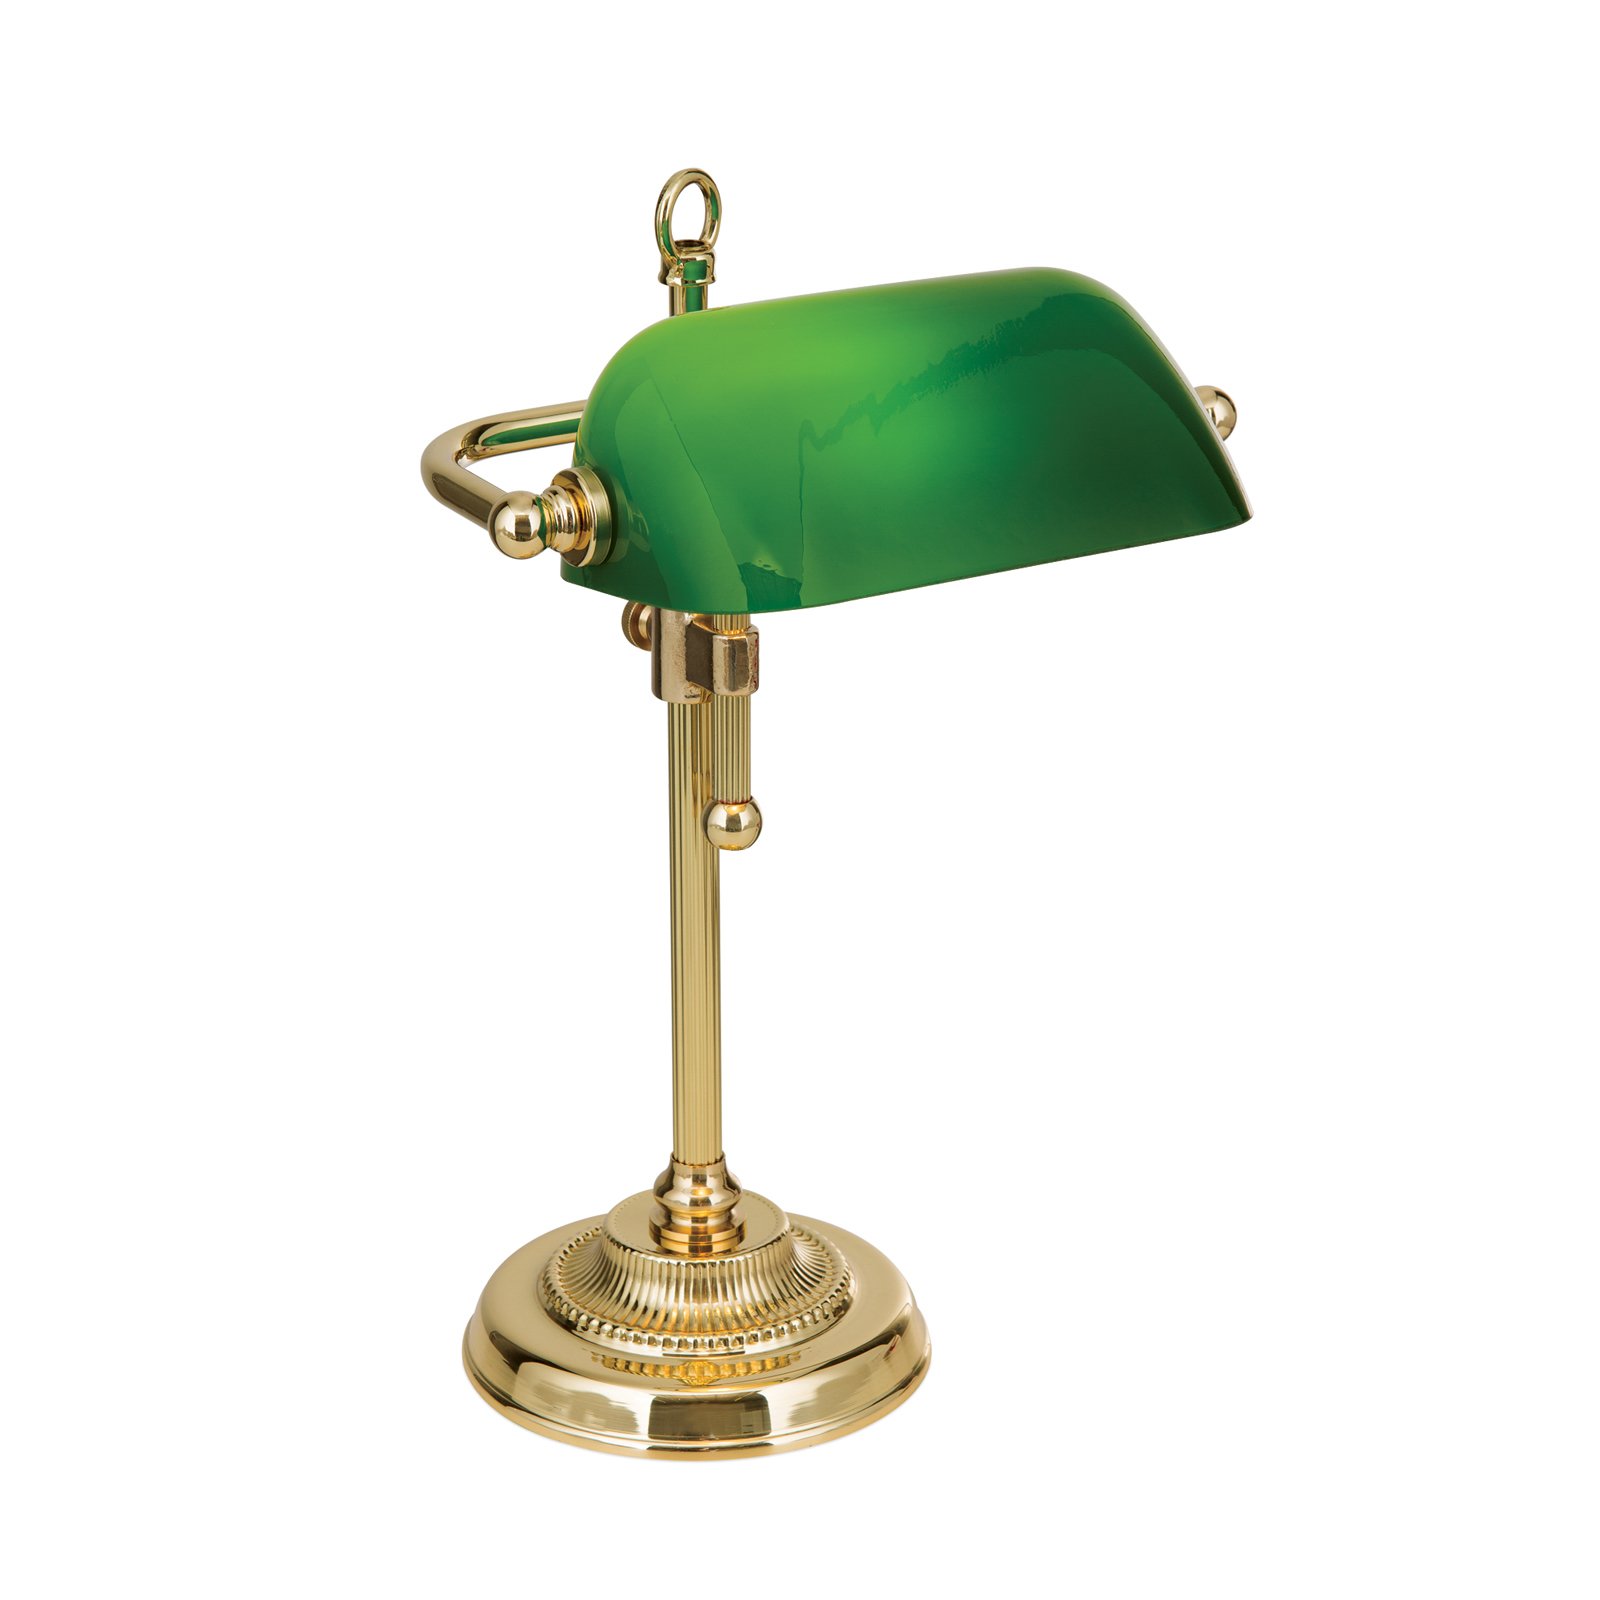 Bankerlampe Harvard, messing/grün, Höhe 32 cm